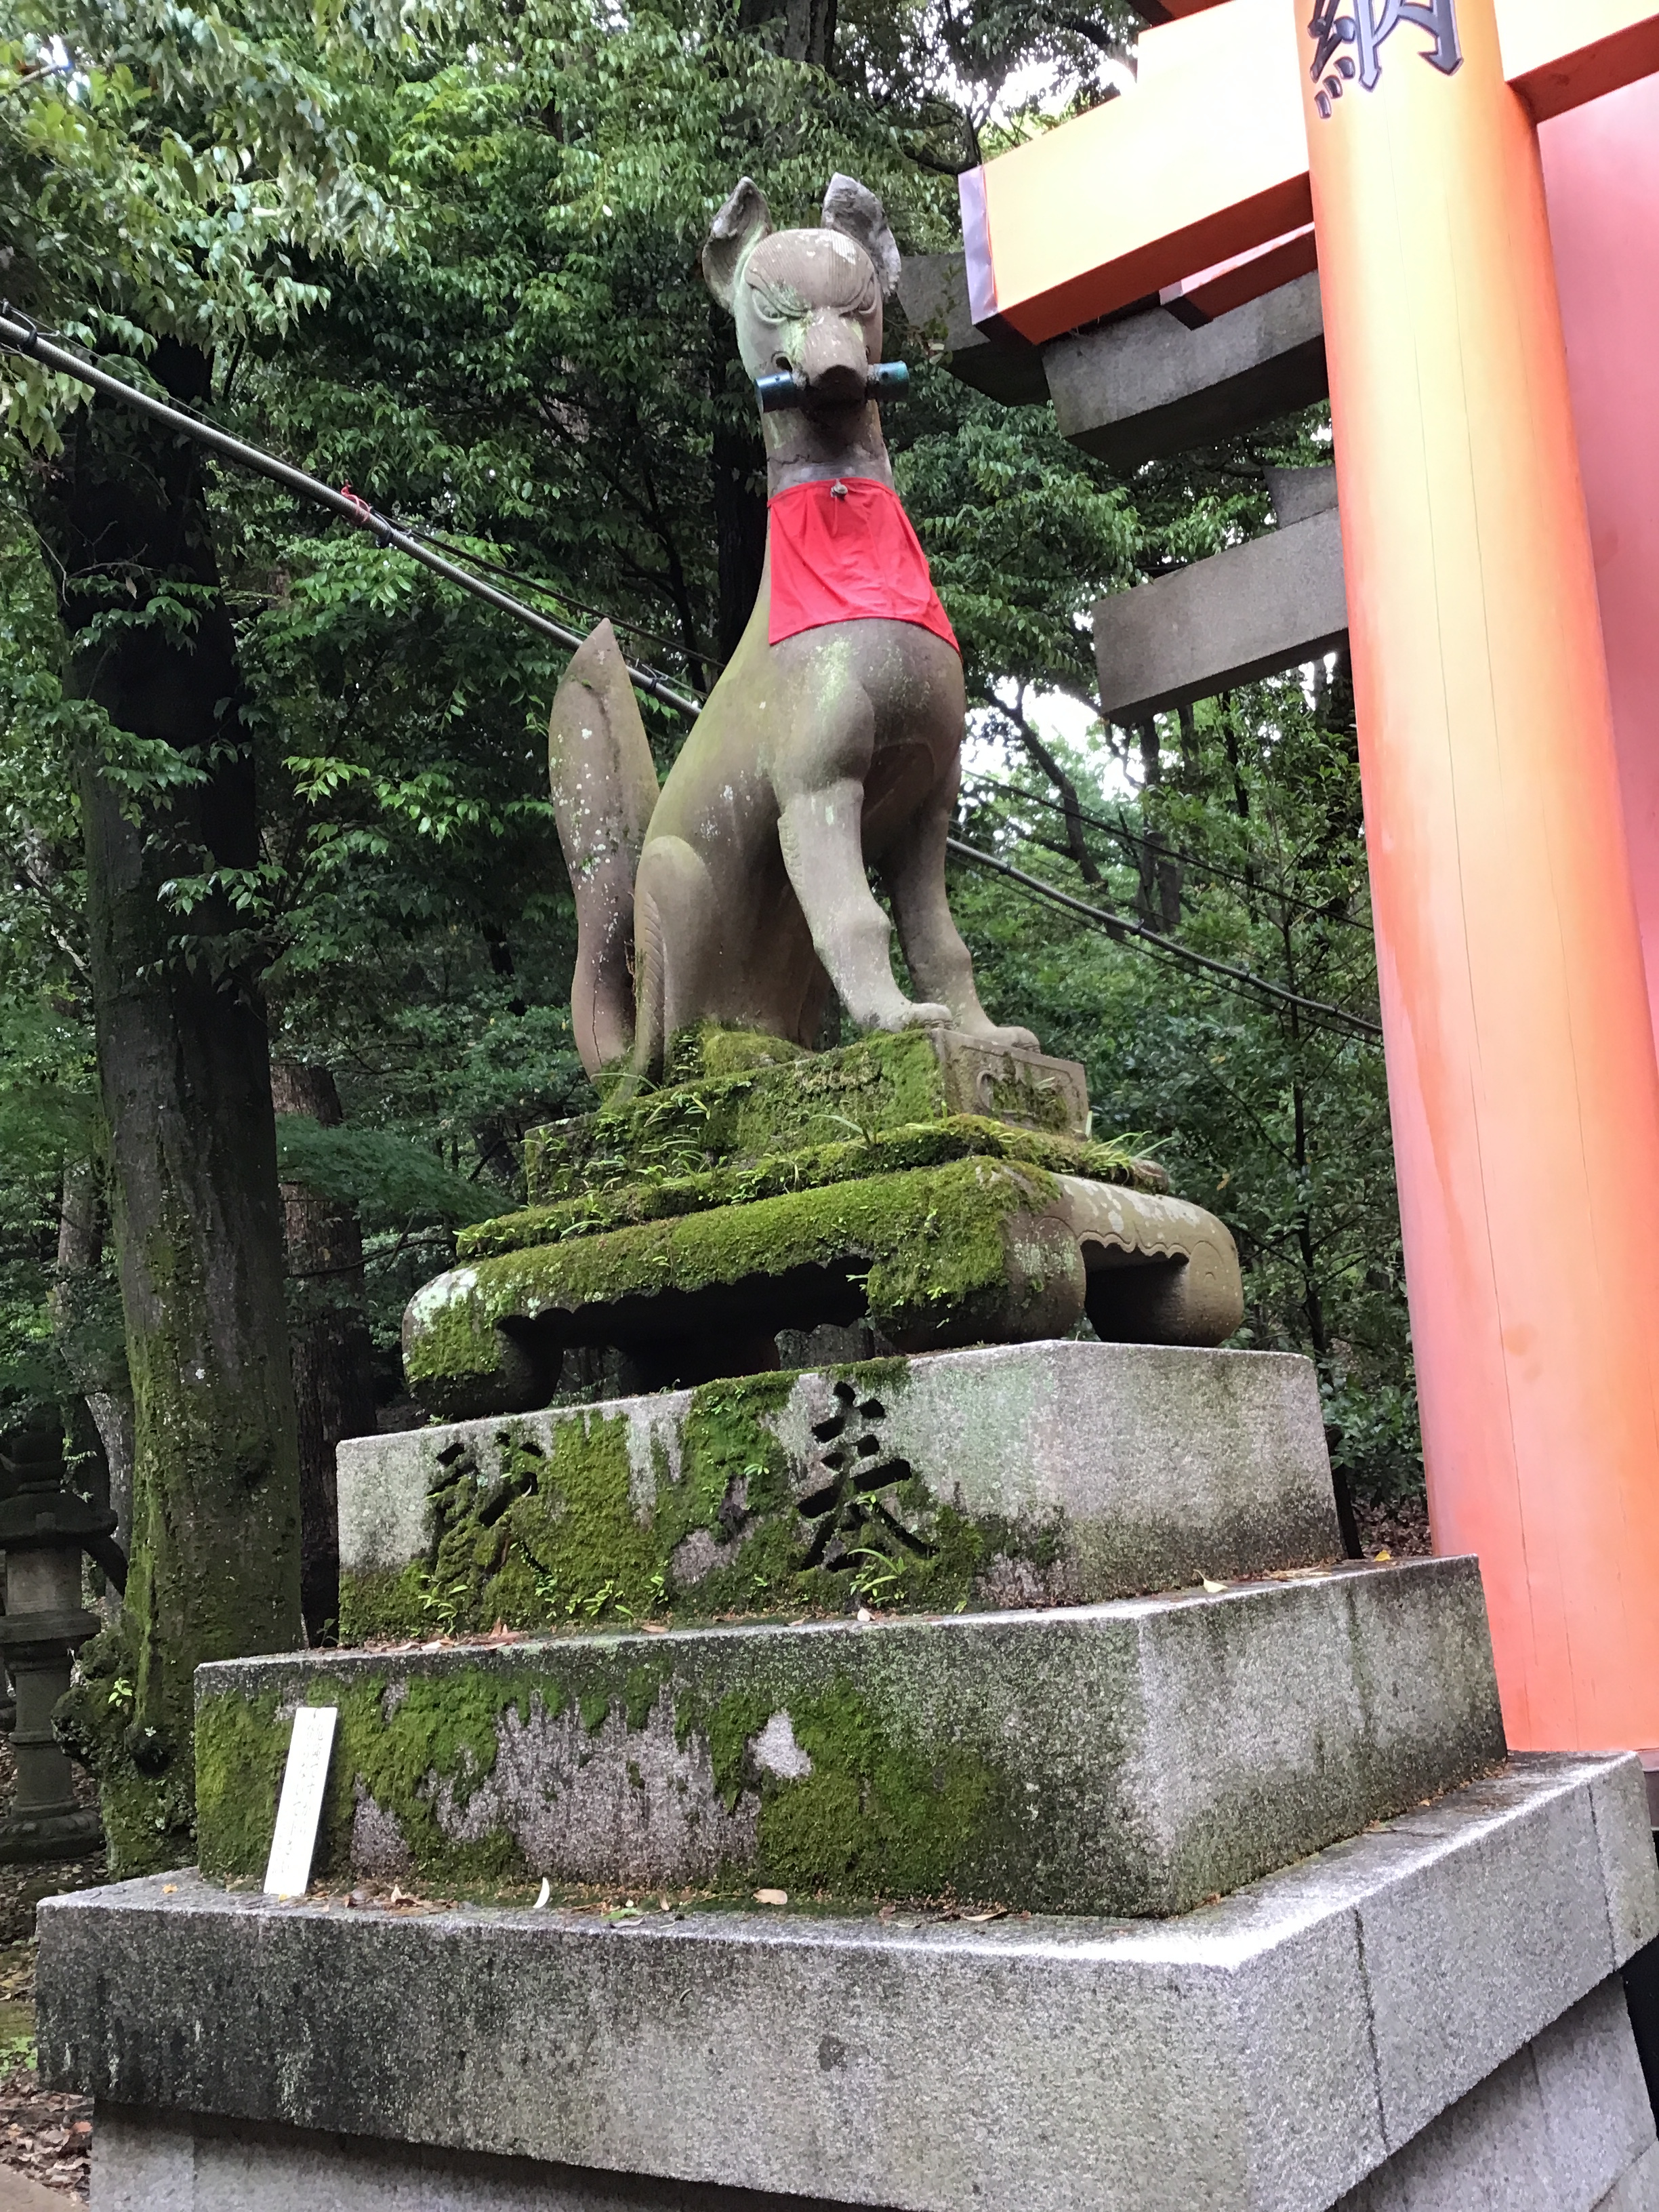 A fox statue